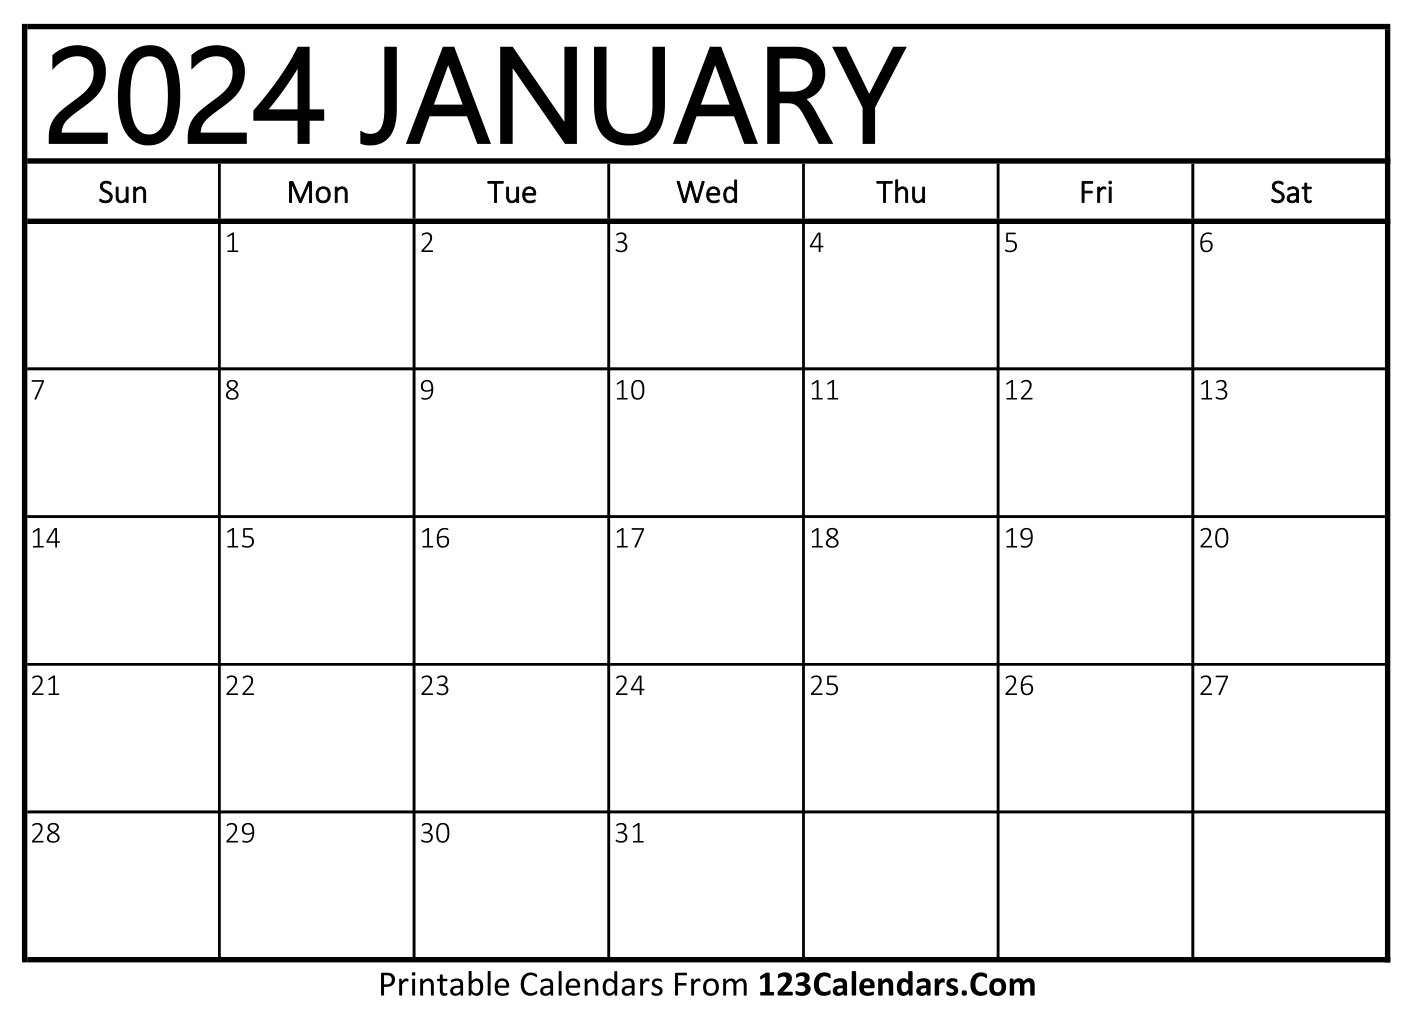 Printable January 2024 Calendar Templates - 123Calendars | Printable Calendar 2024 January Month